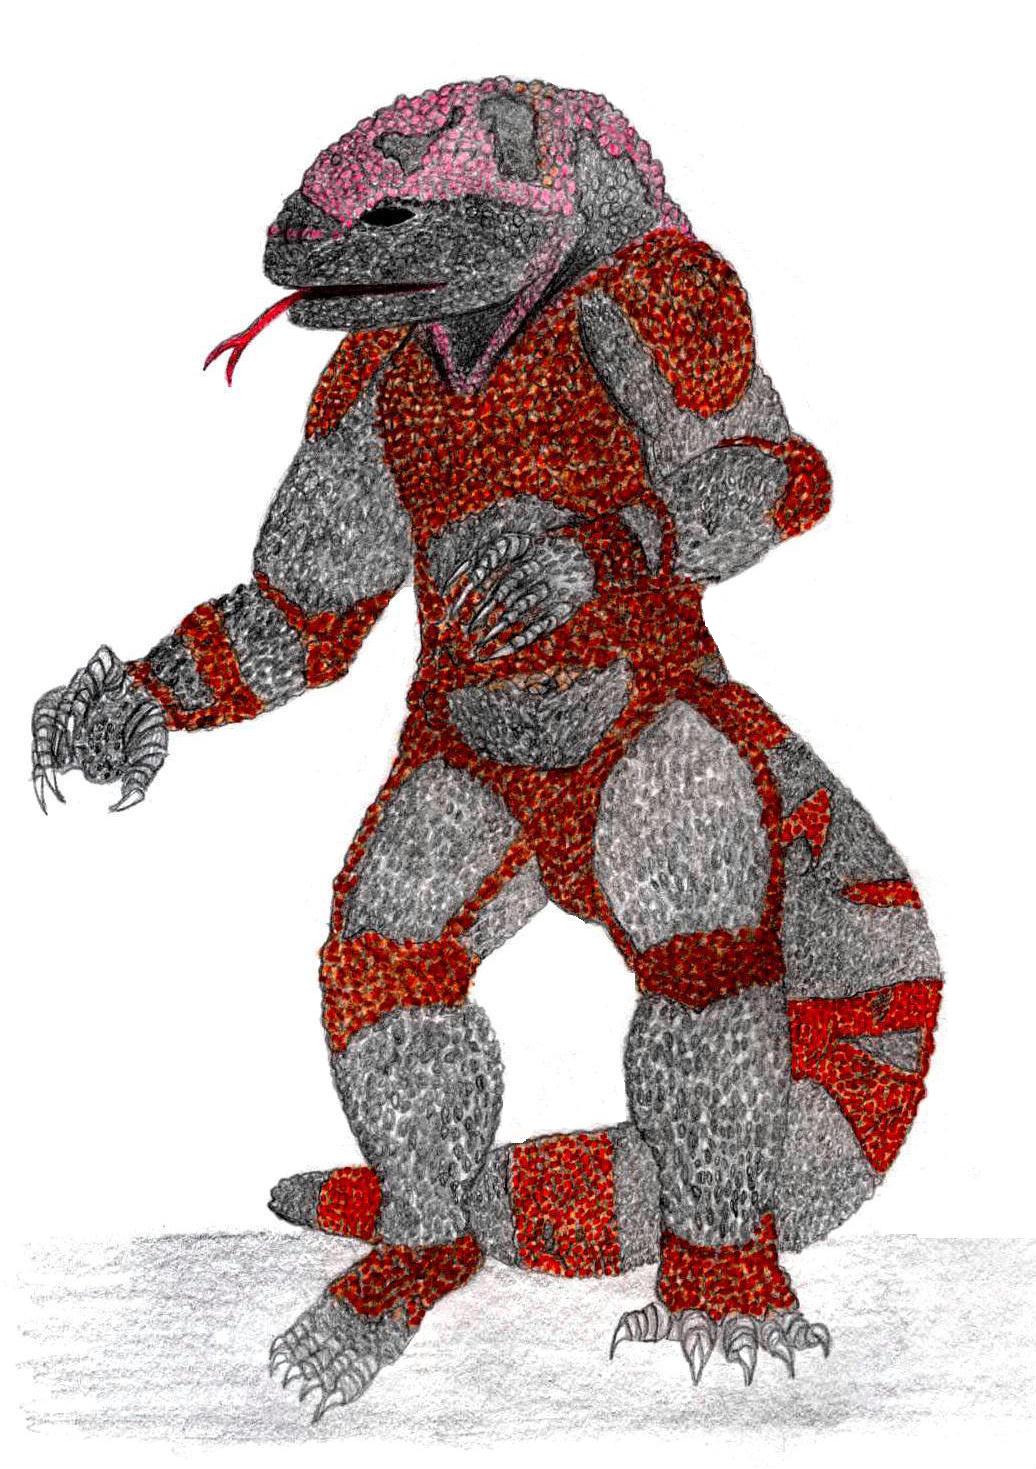 Gila Monster Anthro by Ran_The_Hyena